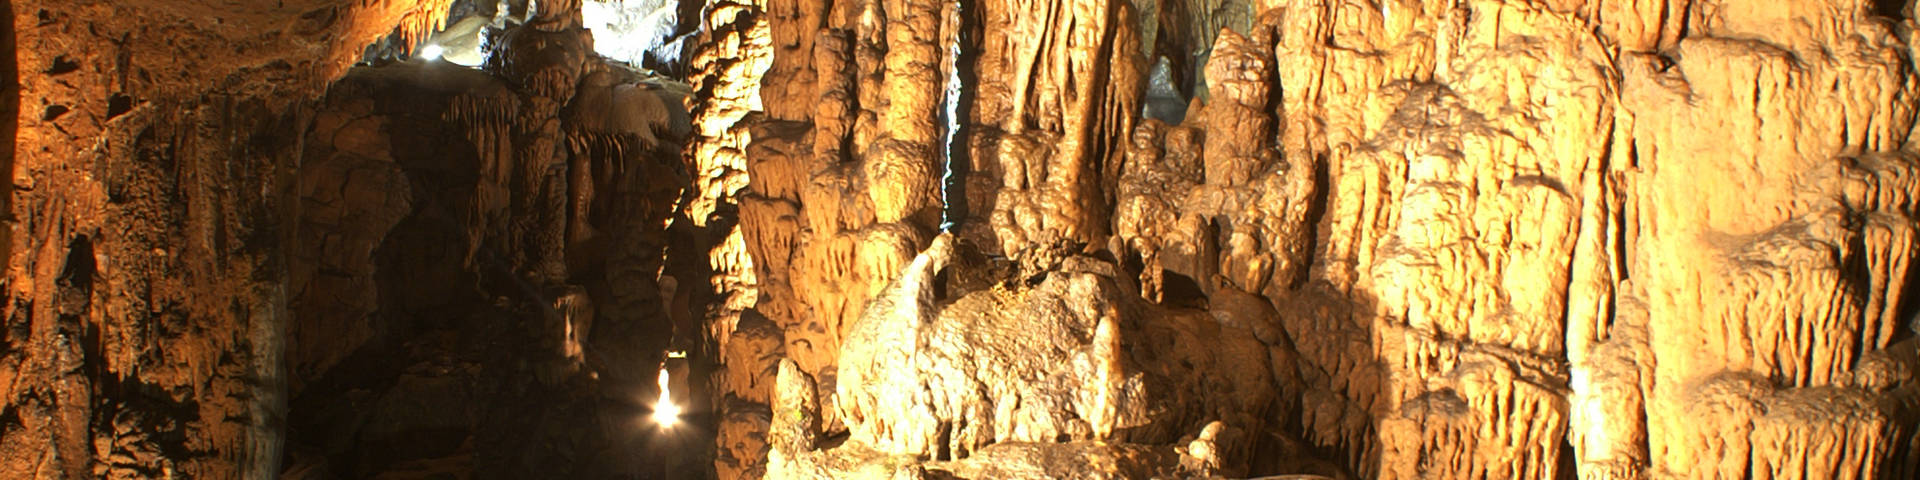 Grasslhöhle im Naturpark Almenland